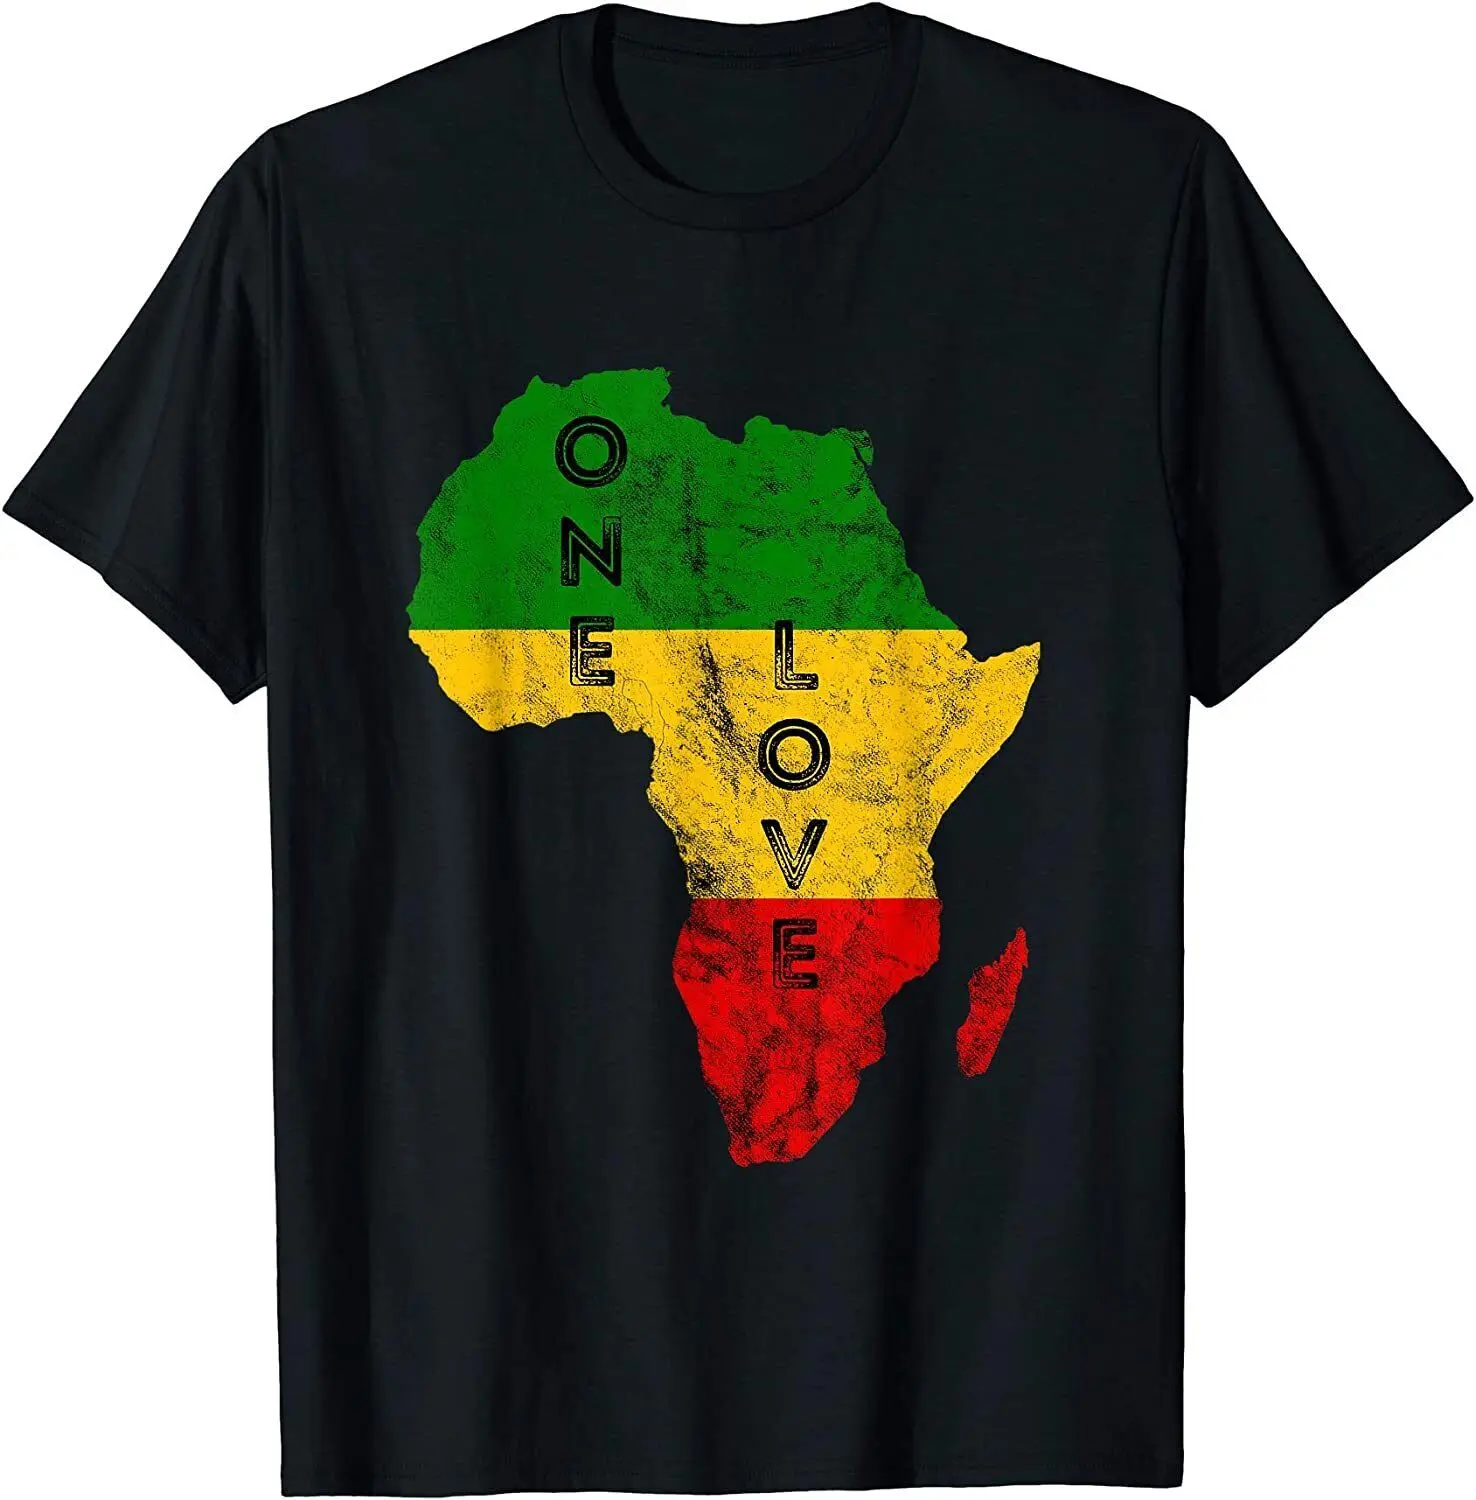 Reggae Africa Map Rasta Music Shirt Clothes 90s Hipster Short T-shirts For Men New Cool Tshirt